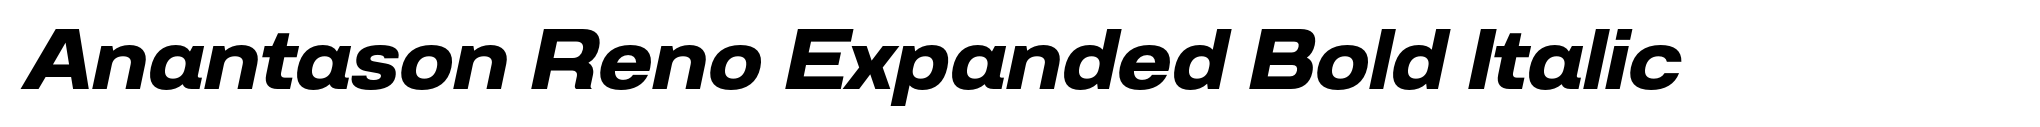 Anantason Reno Expanded Bold Italic image